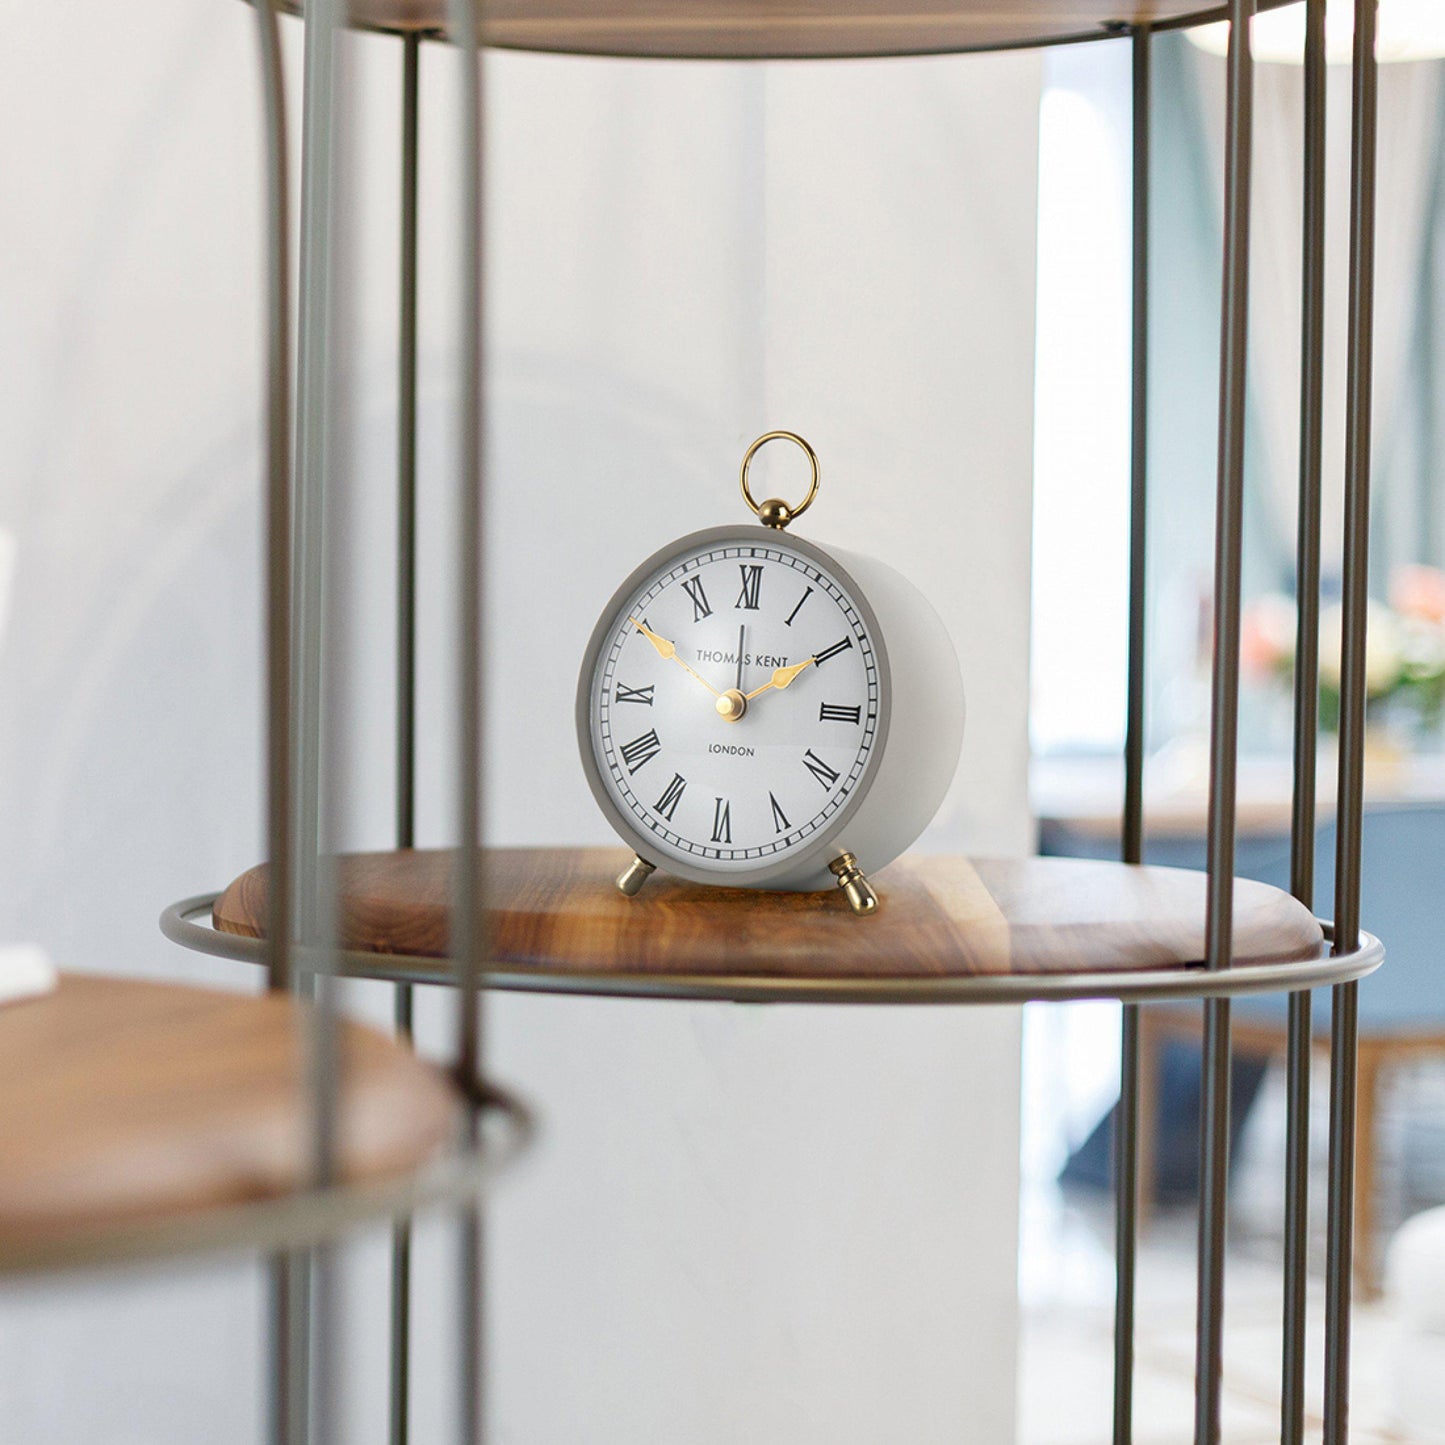 4" Mantel Alarm Clock | Dove